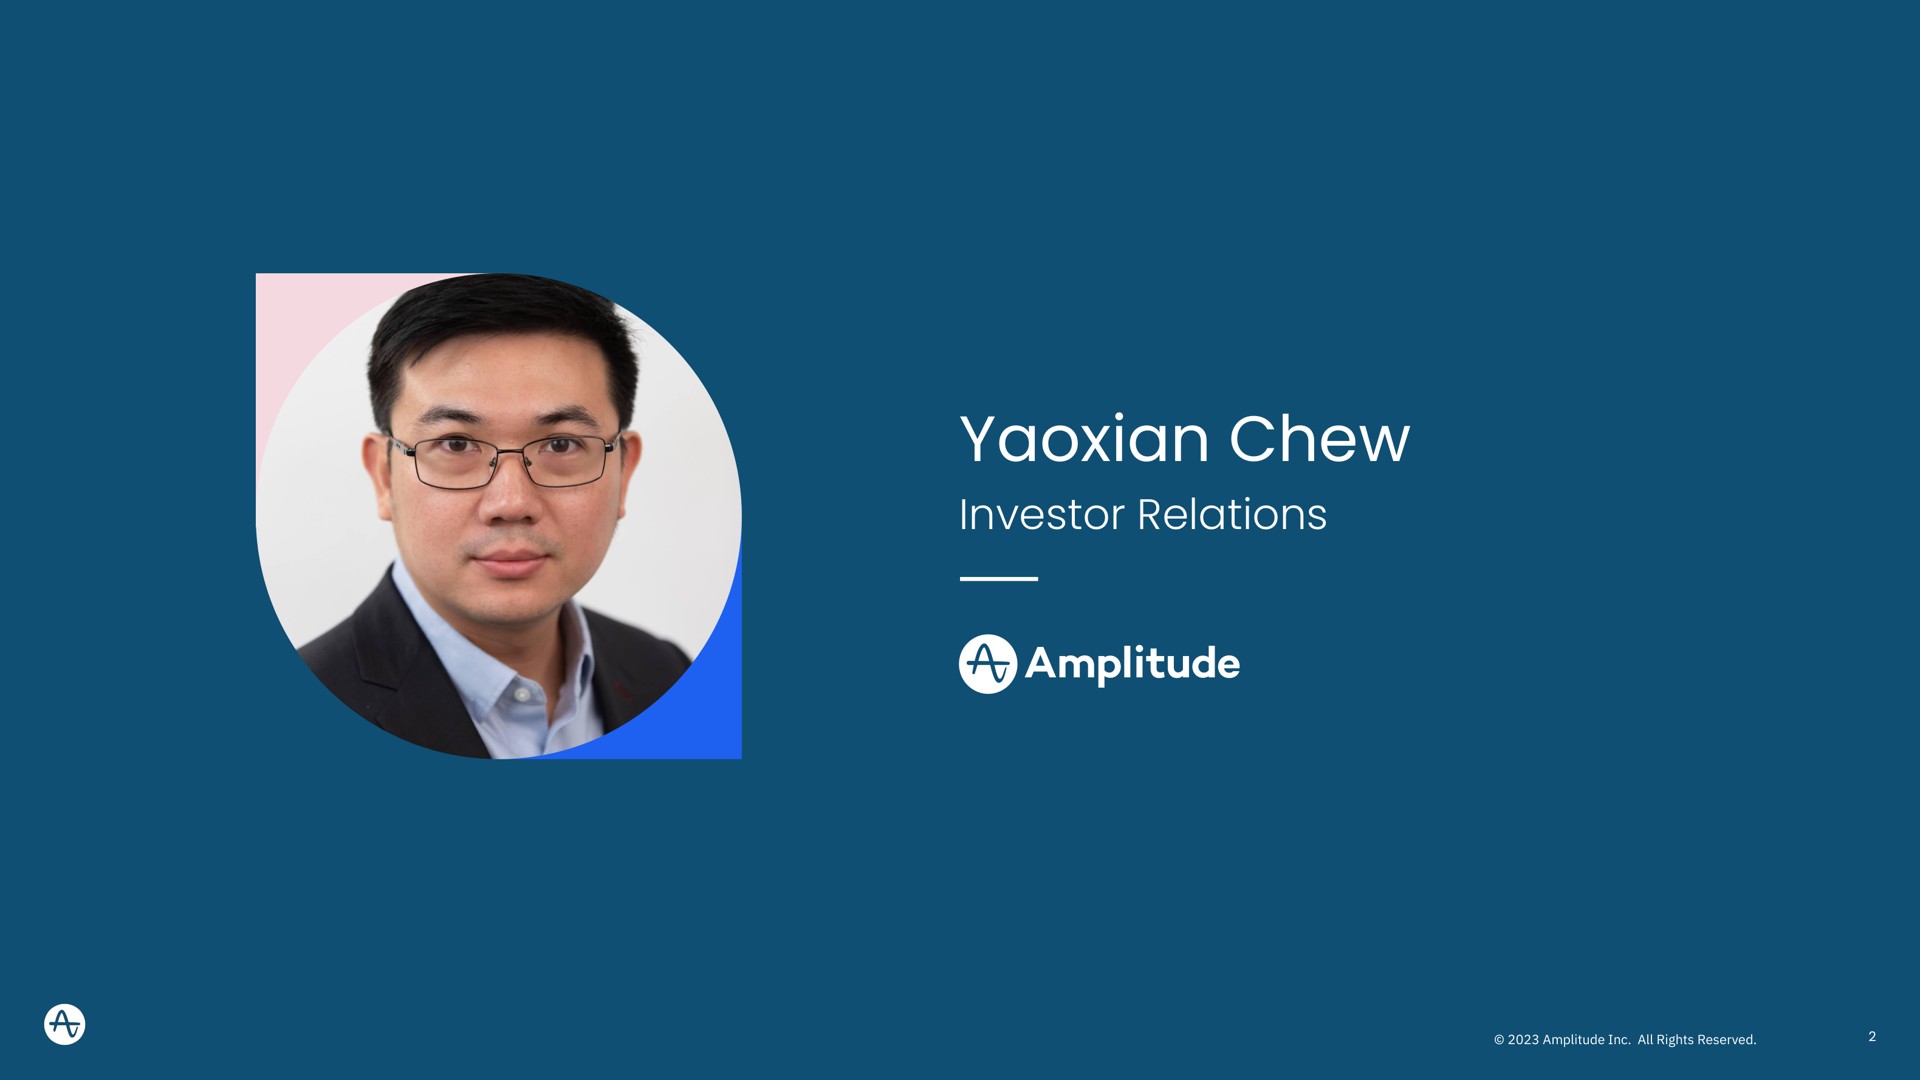 chew investor relations | Amplitude